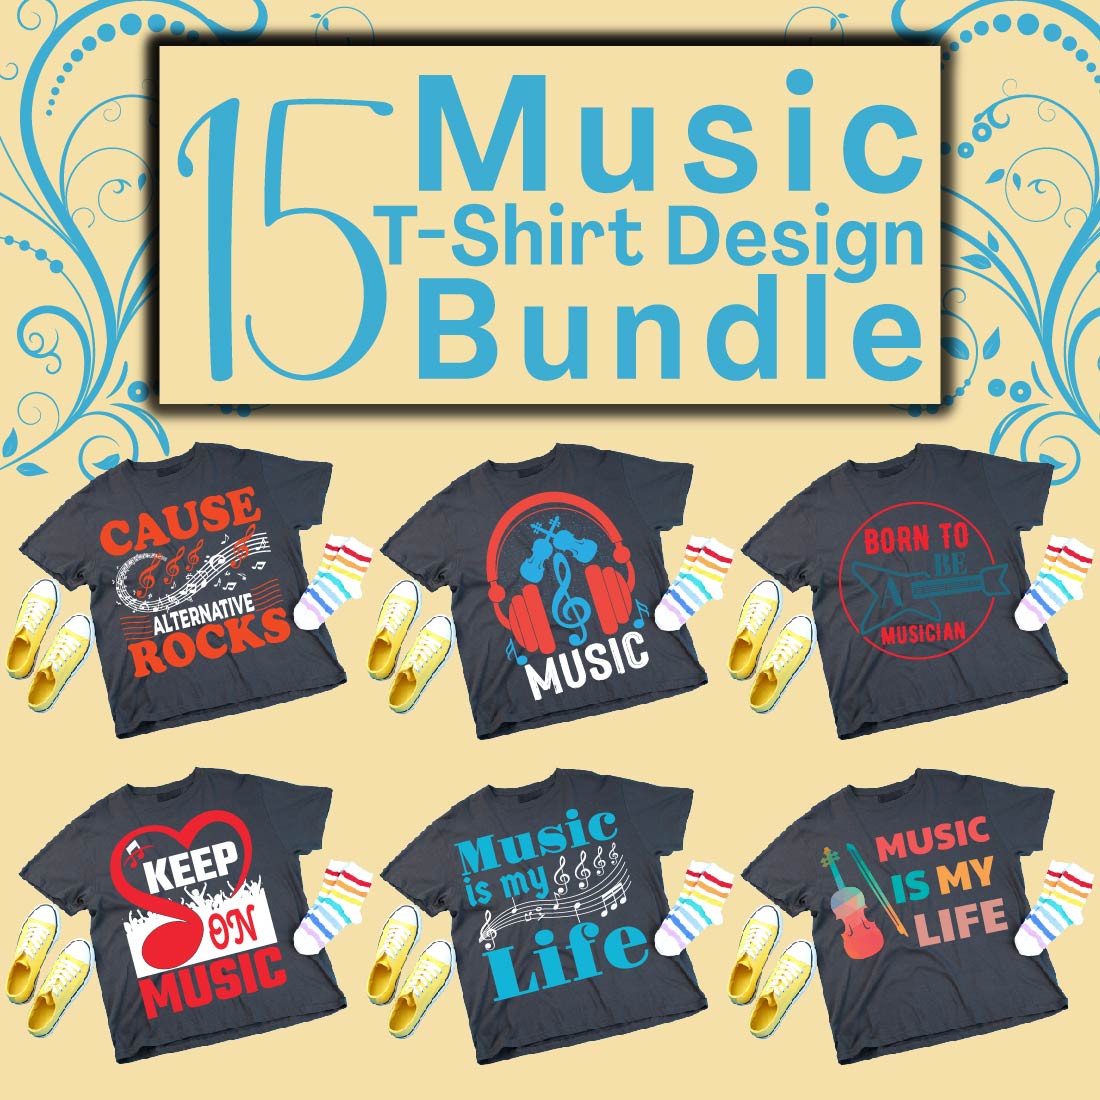 T-Shirt Music Design Bundle cover image.